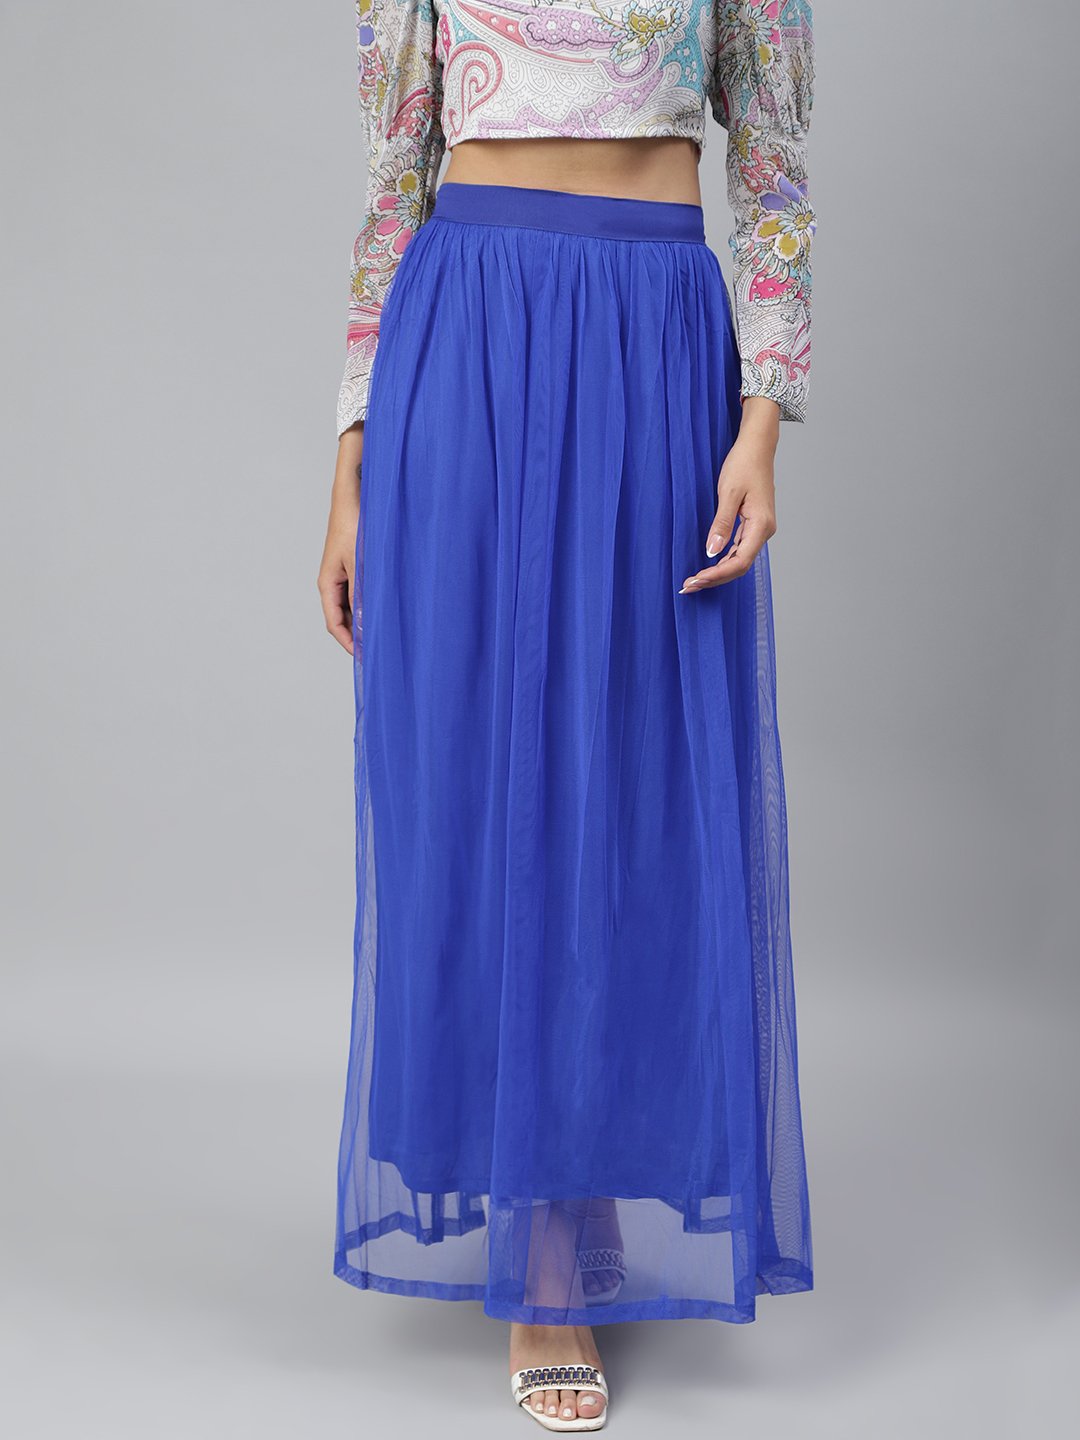 SCORPIUS Royal blue net long skirt